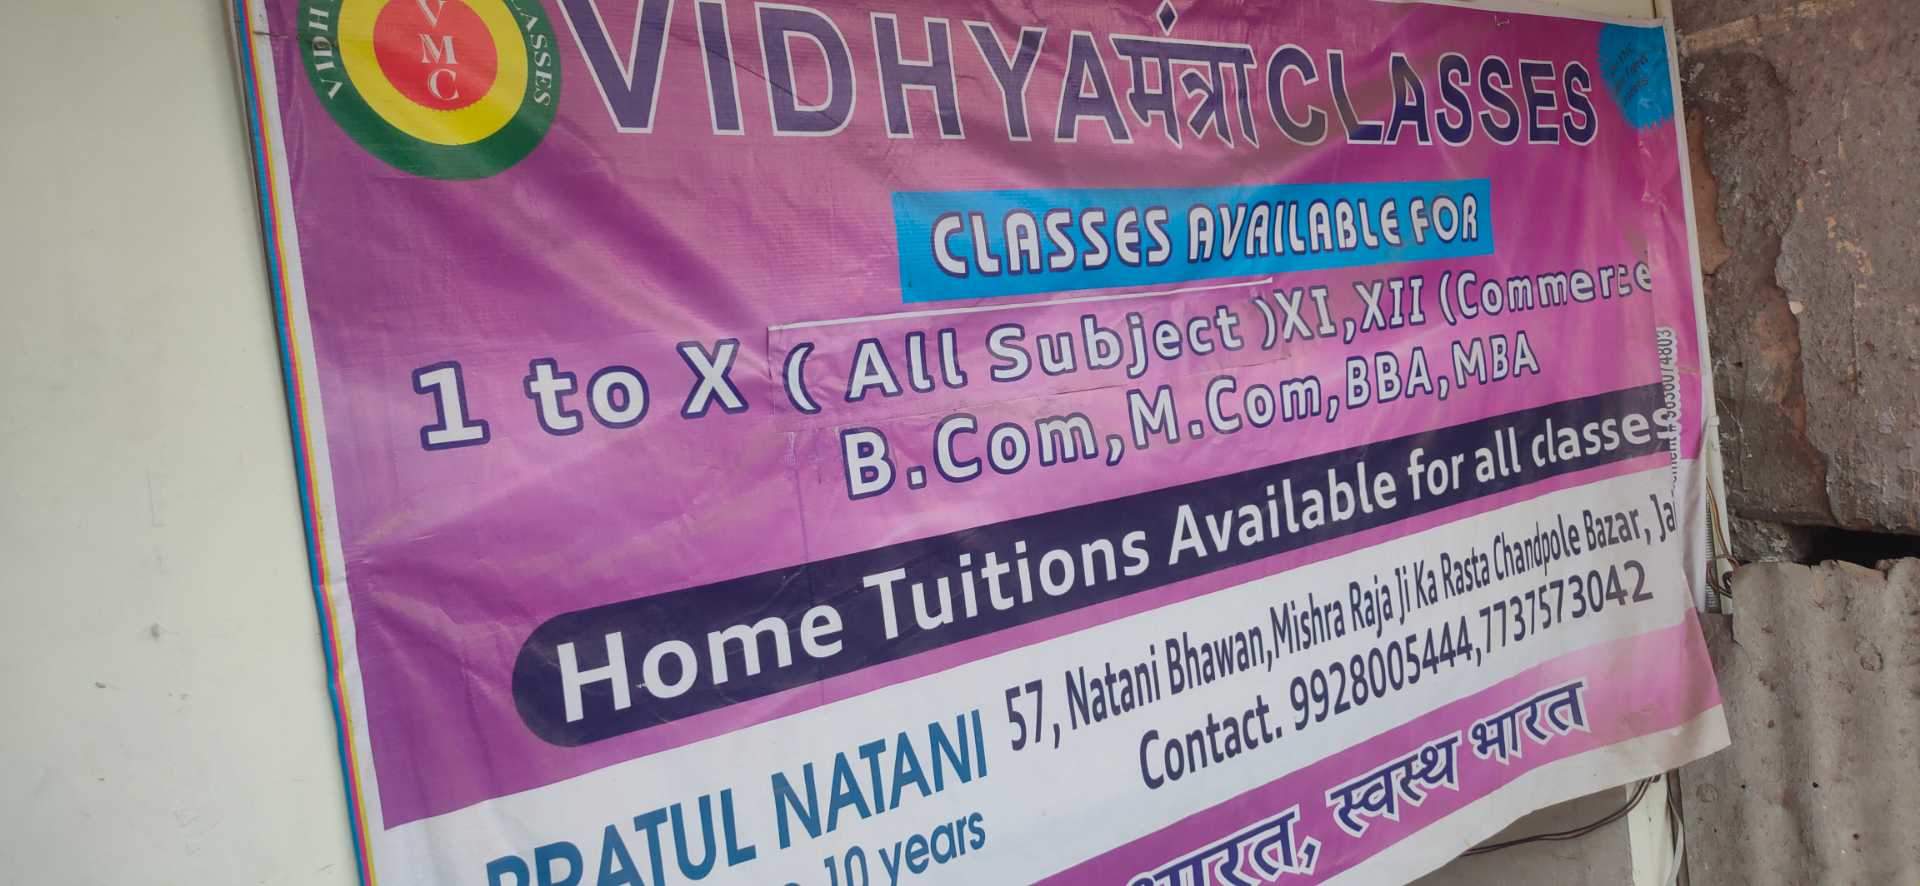 Vidhya Mantra Classes